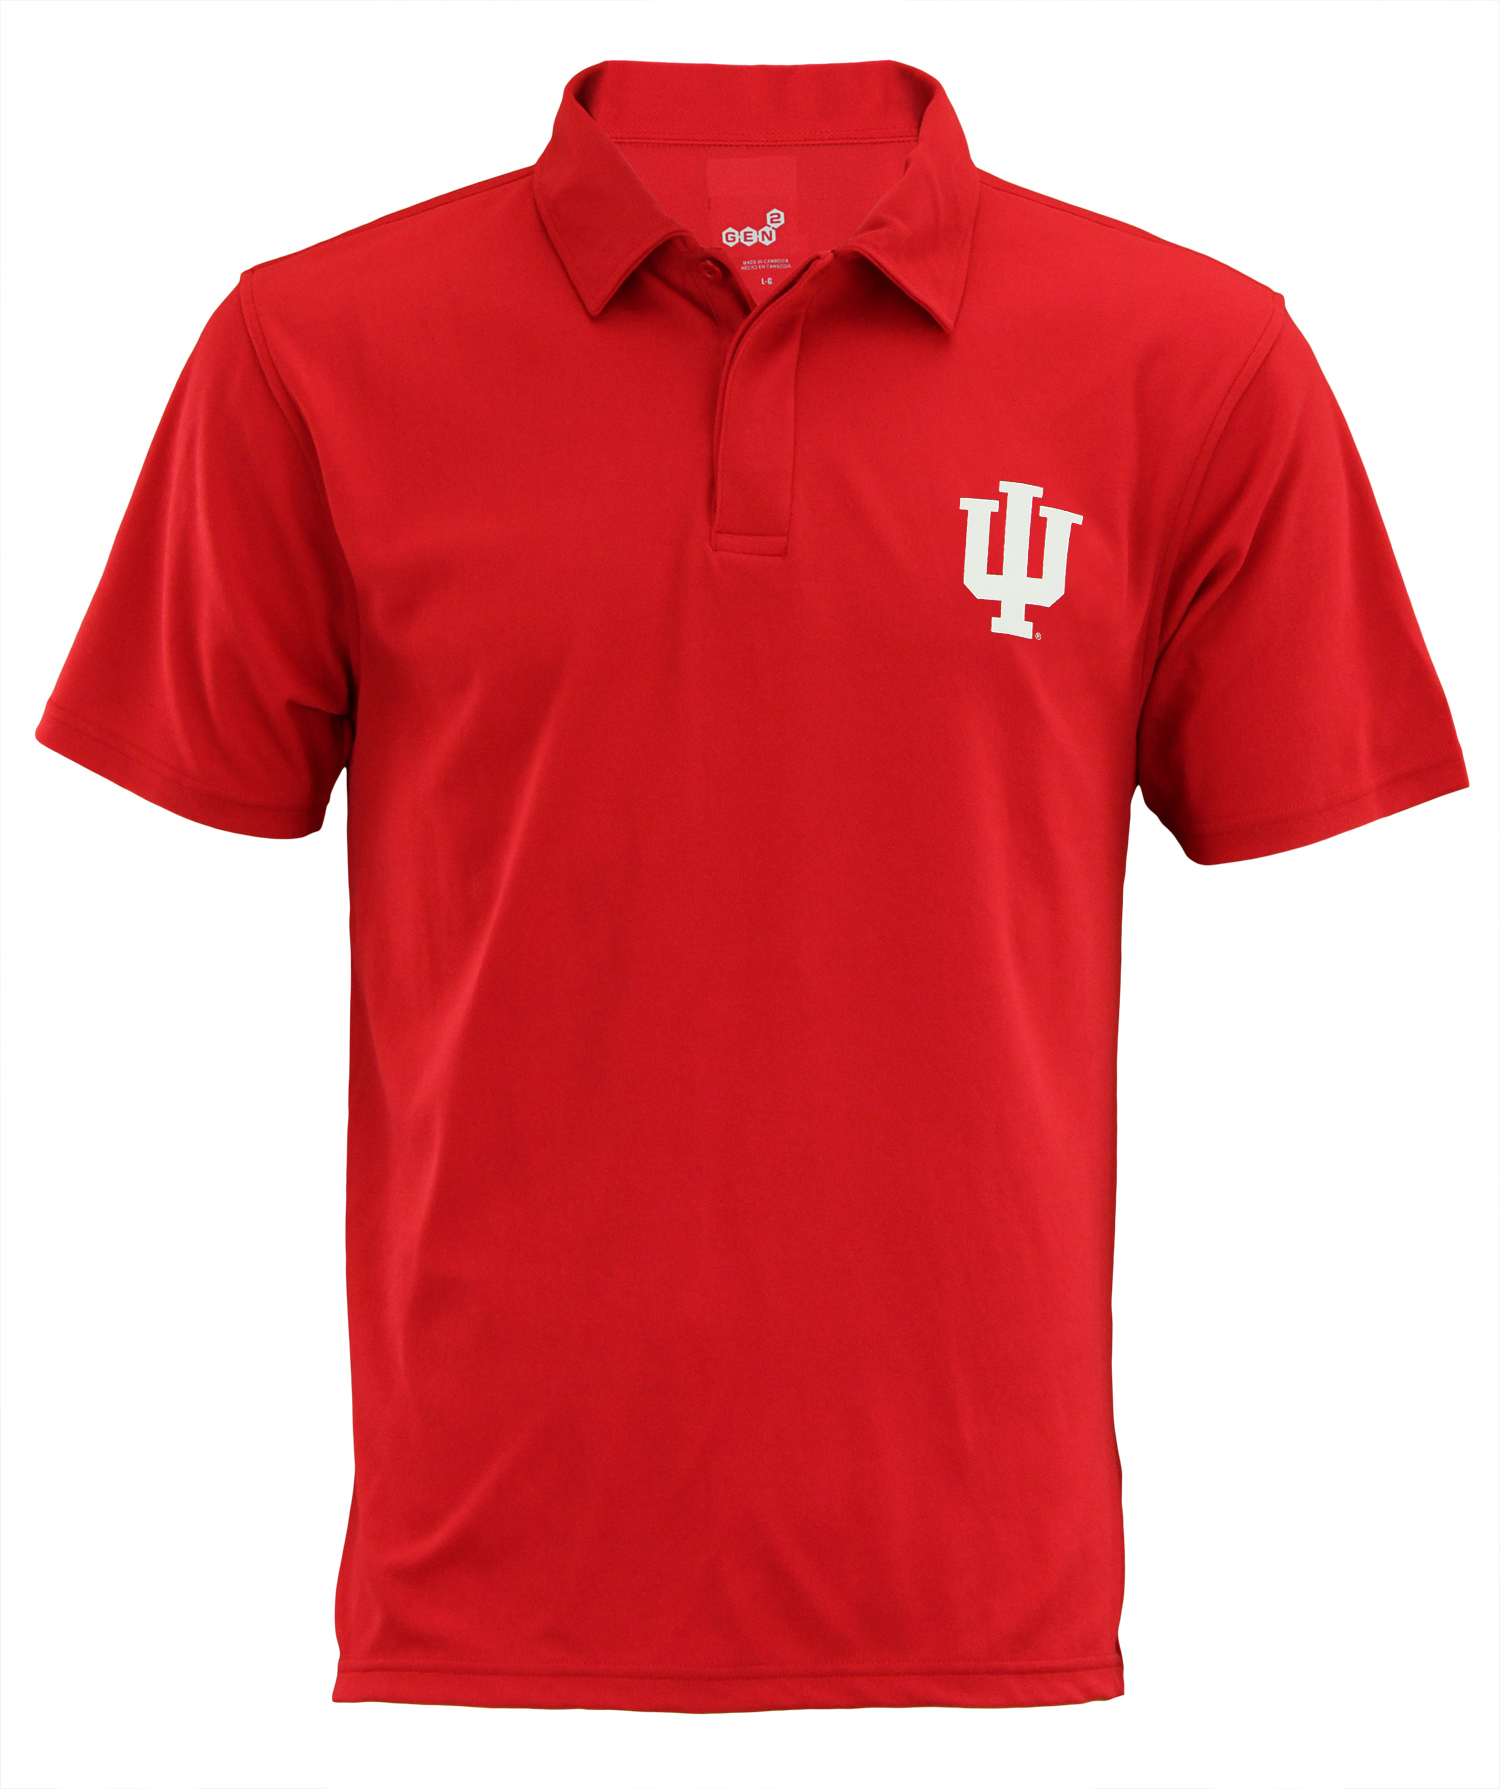 NCAA Men's Indiana Hoosiers Short Sleeve Performance Polo Shirt | eBay